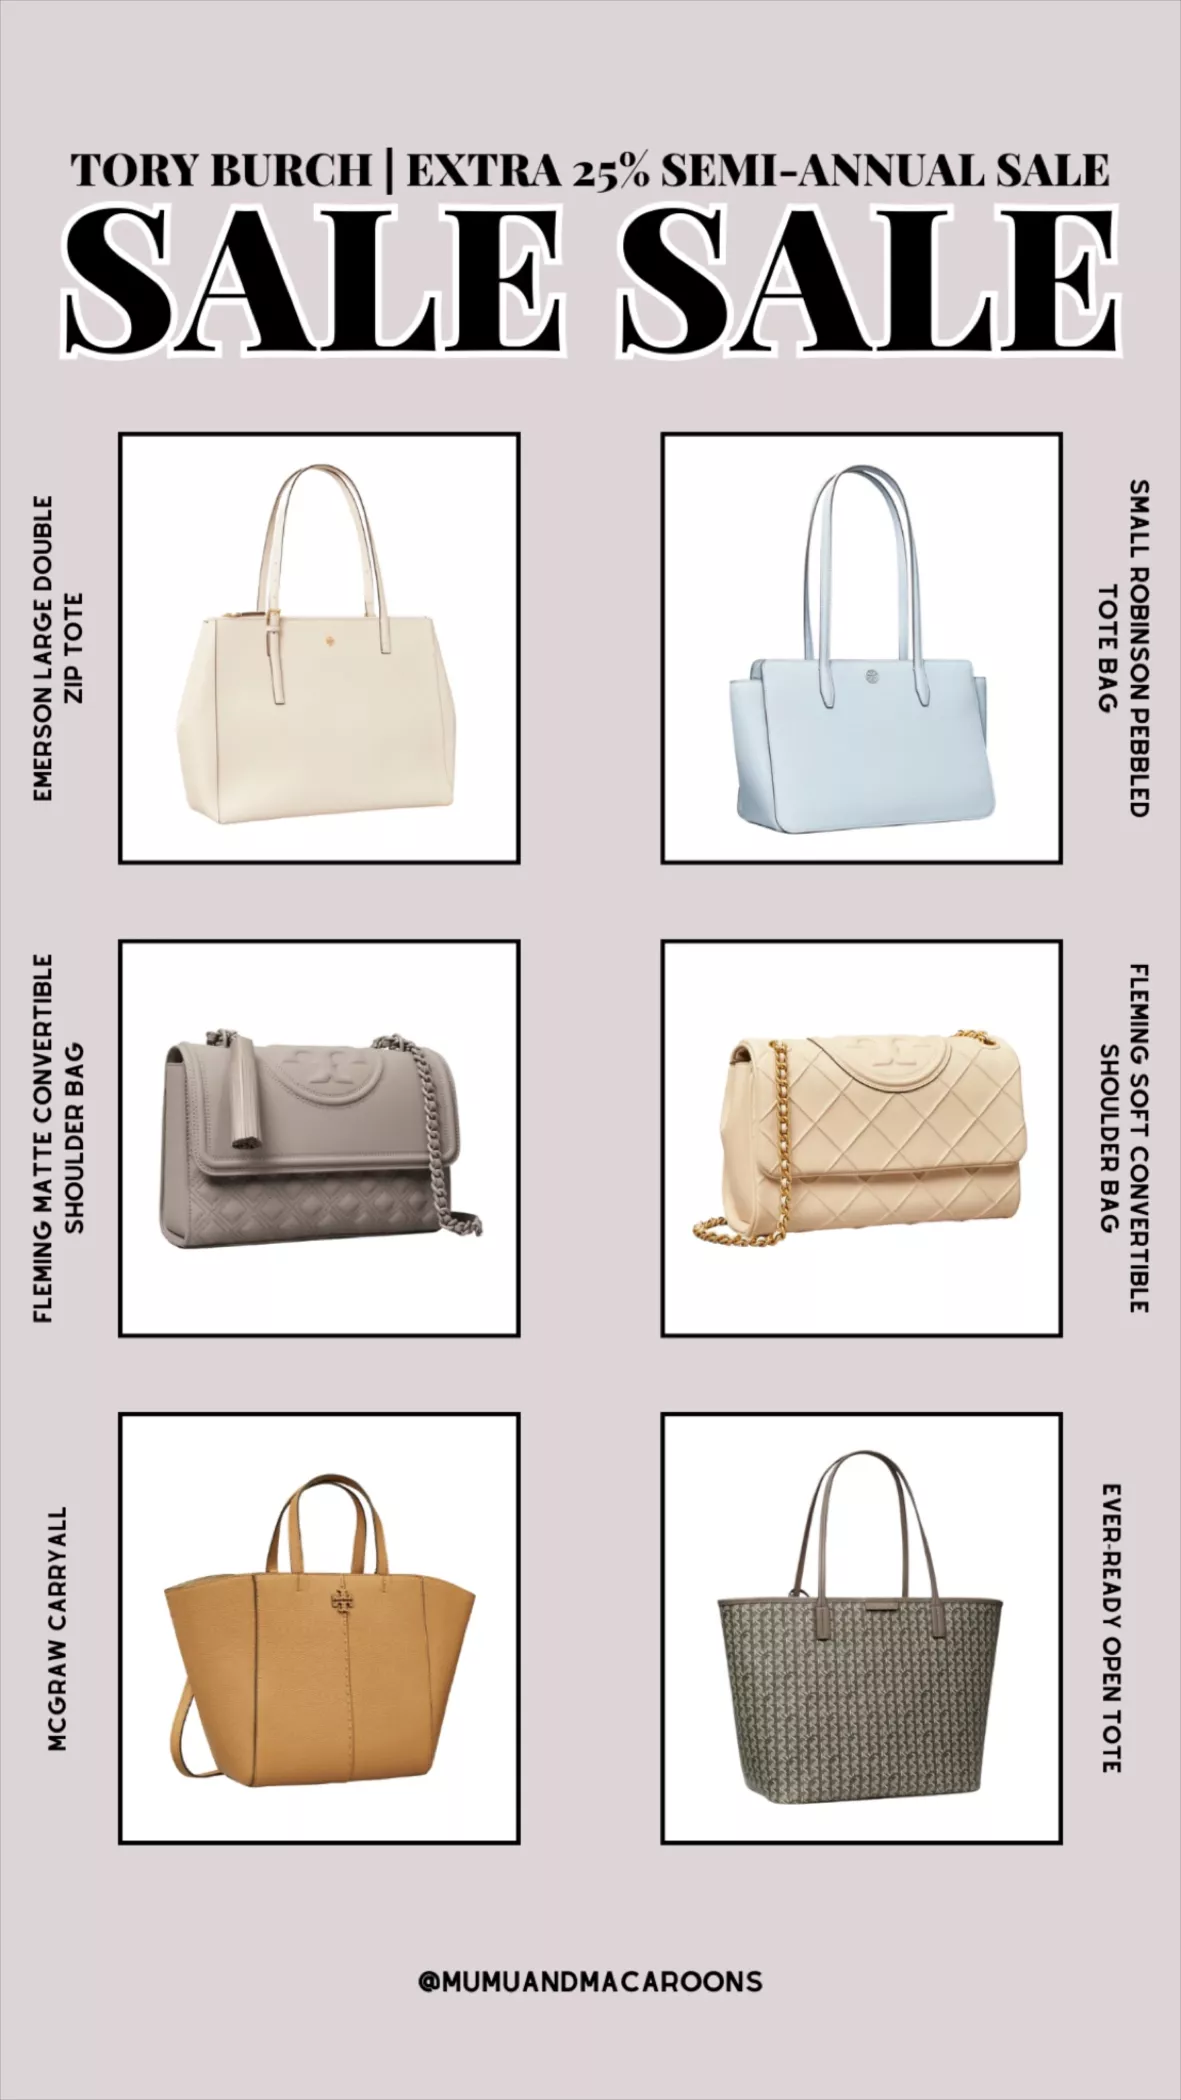 Fleming Matte Double-Zip Mini Bag: Women's Handbags